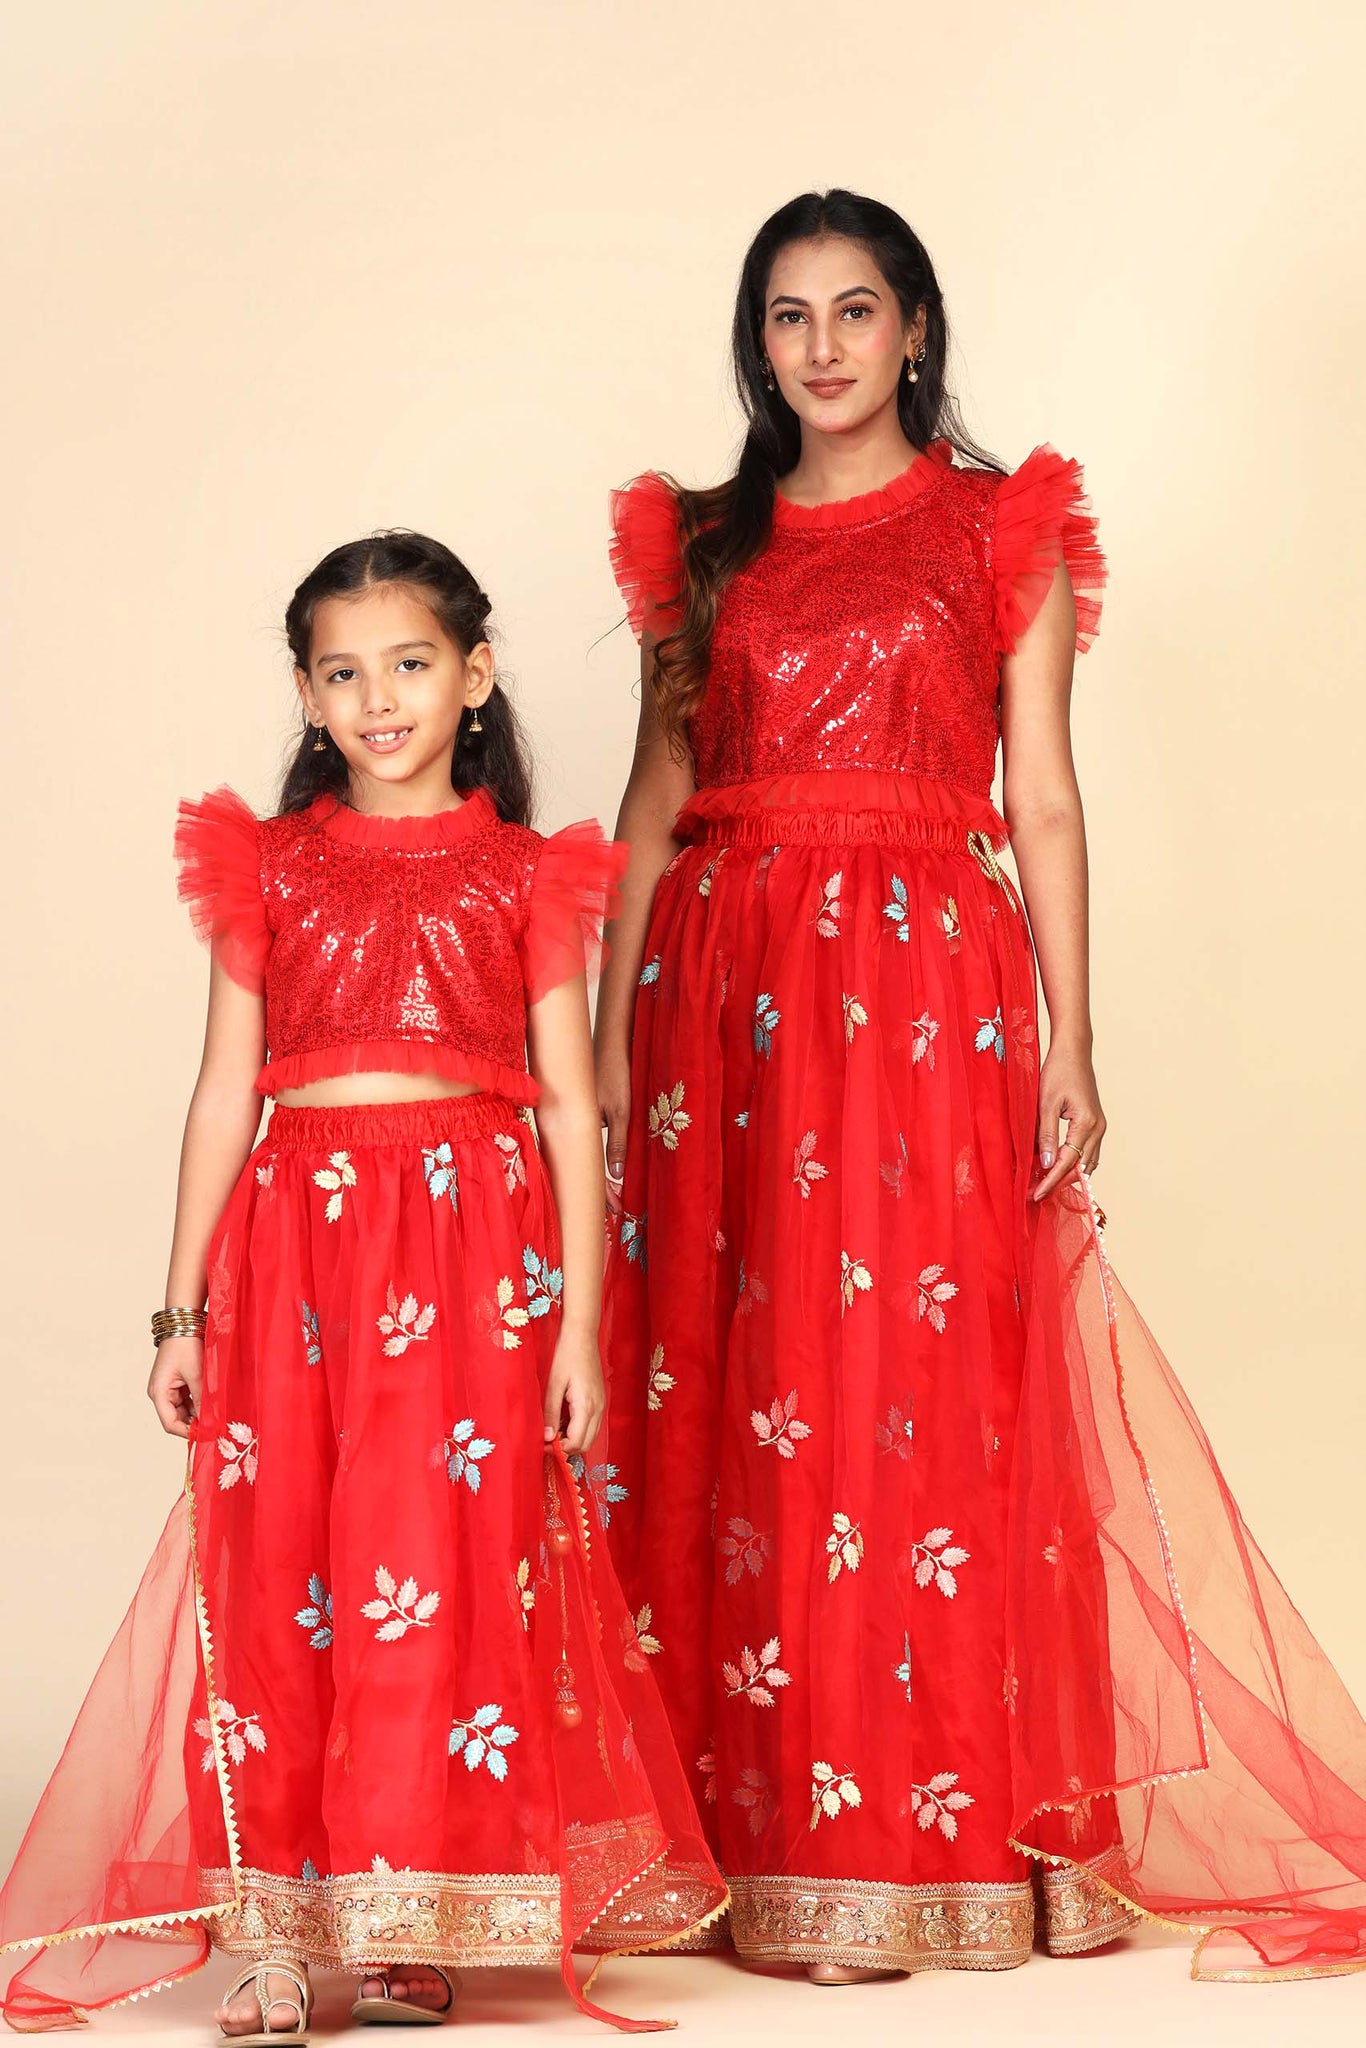 MARCY New Red Pattu Pavadai Tapeta Silk Lehenga Choli for Girl's Dress :  Amazon.in: Fashion